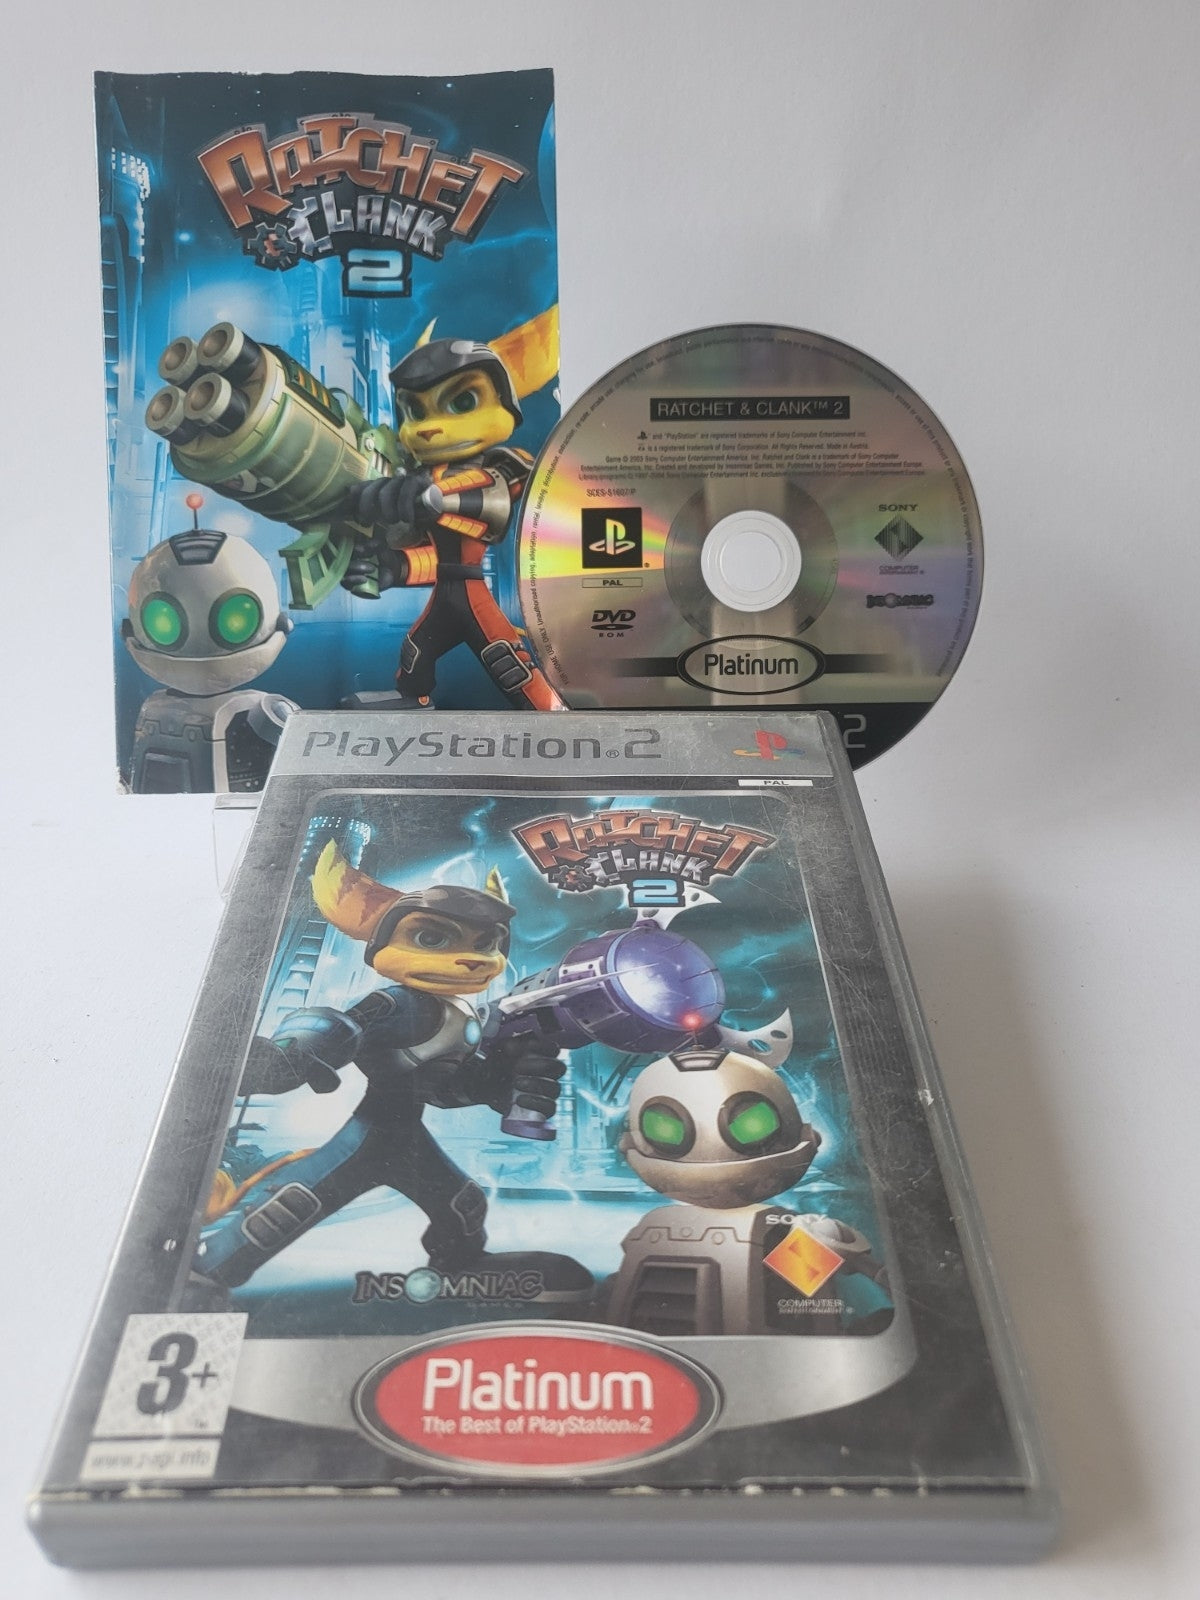 Ratchet & Clank 2 Platinum Edition Playstation 2